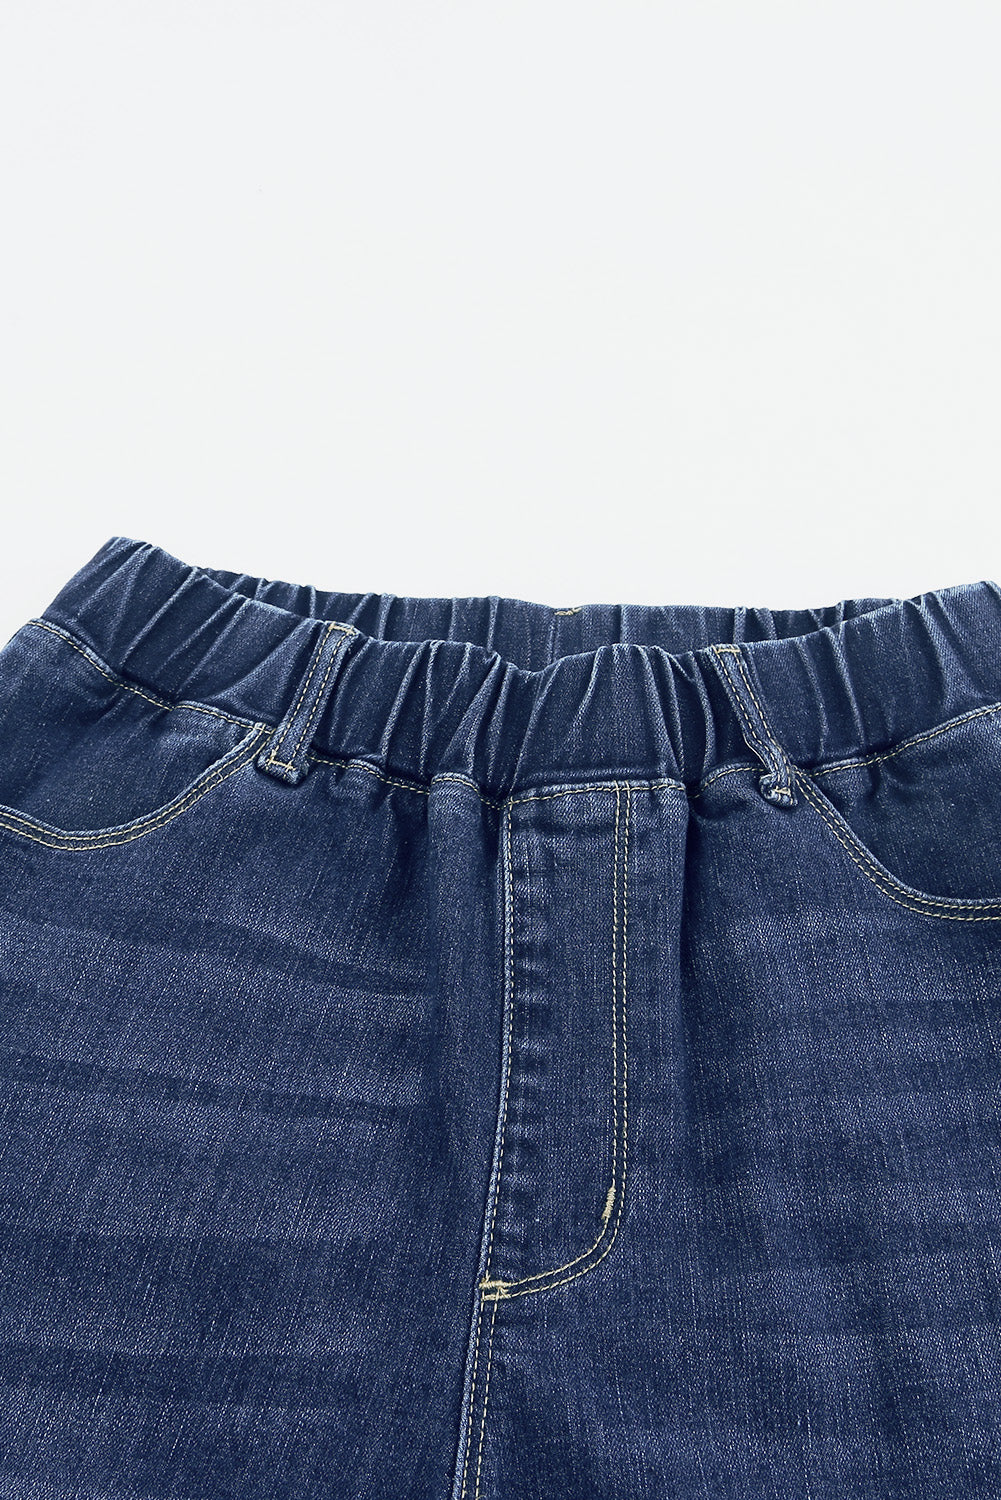 Blue Distressed High Waist Skinny Jeans Jeans JT's Designer Fashion